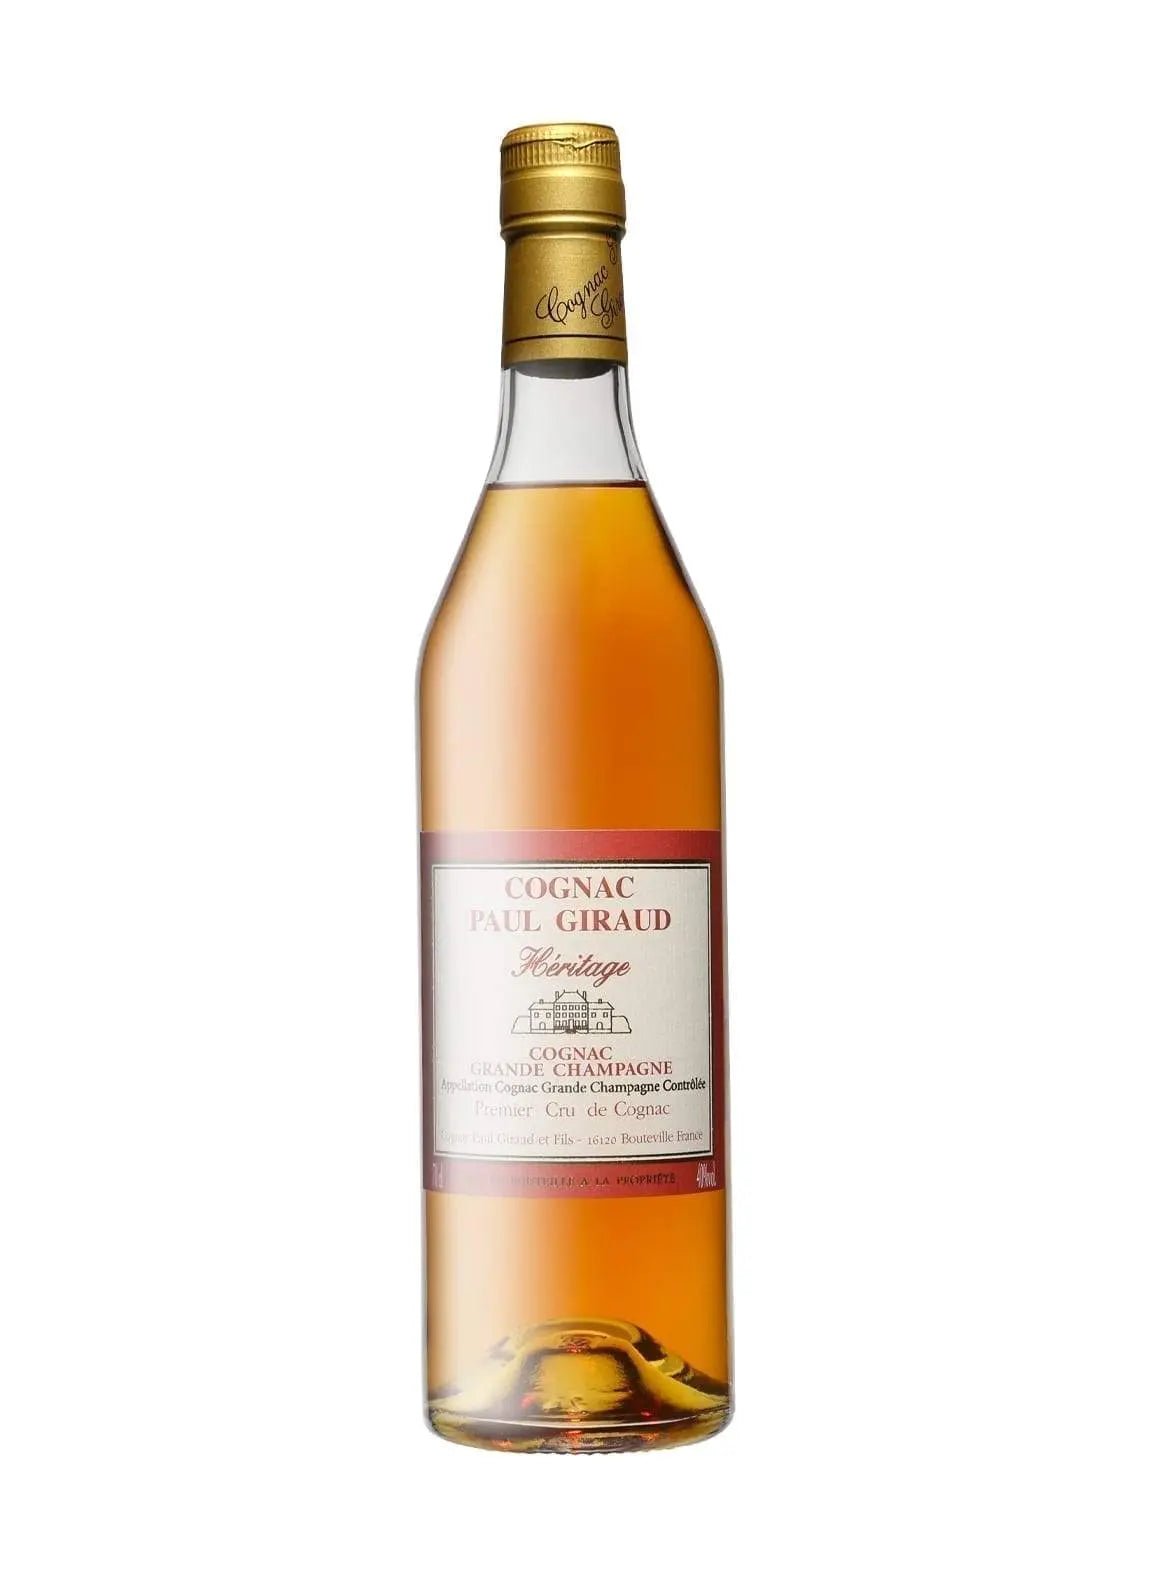 Paul Giraud Cognac Heritage 60 years Grande Champagne 40% 700ml - Brandy - Liquor Wine Cave